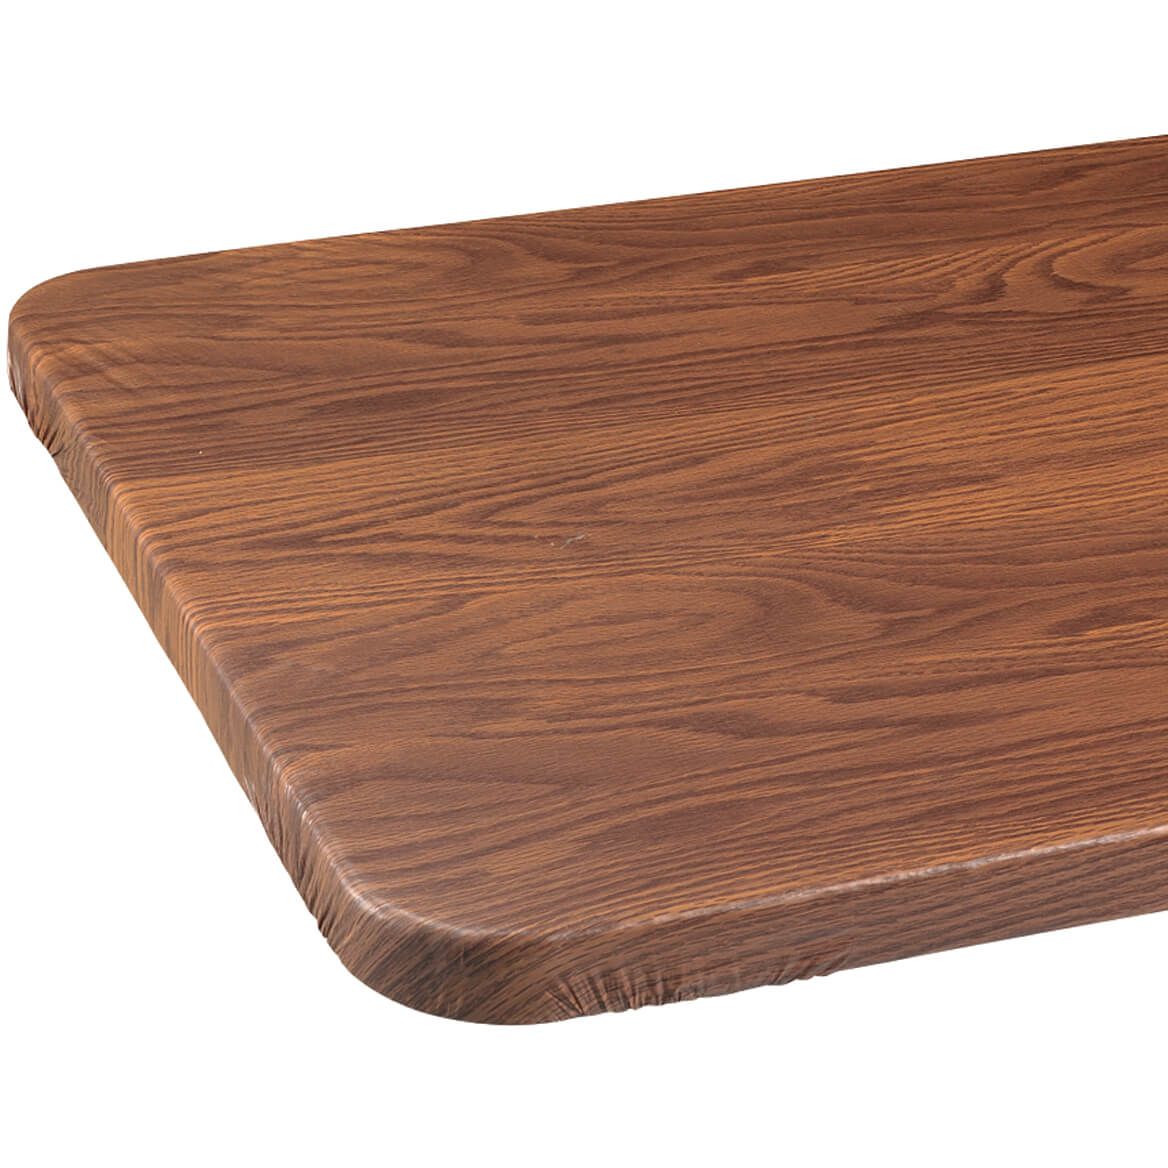 Wood Grain Vinyl Elasticized Banquet Table Cover + '-' + 344629